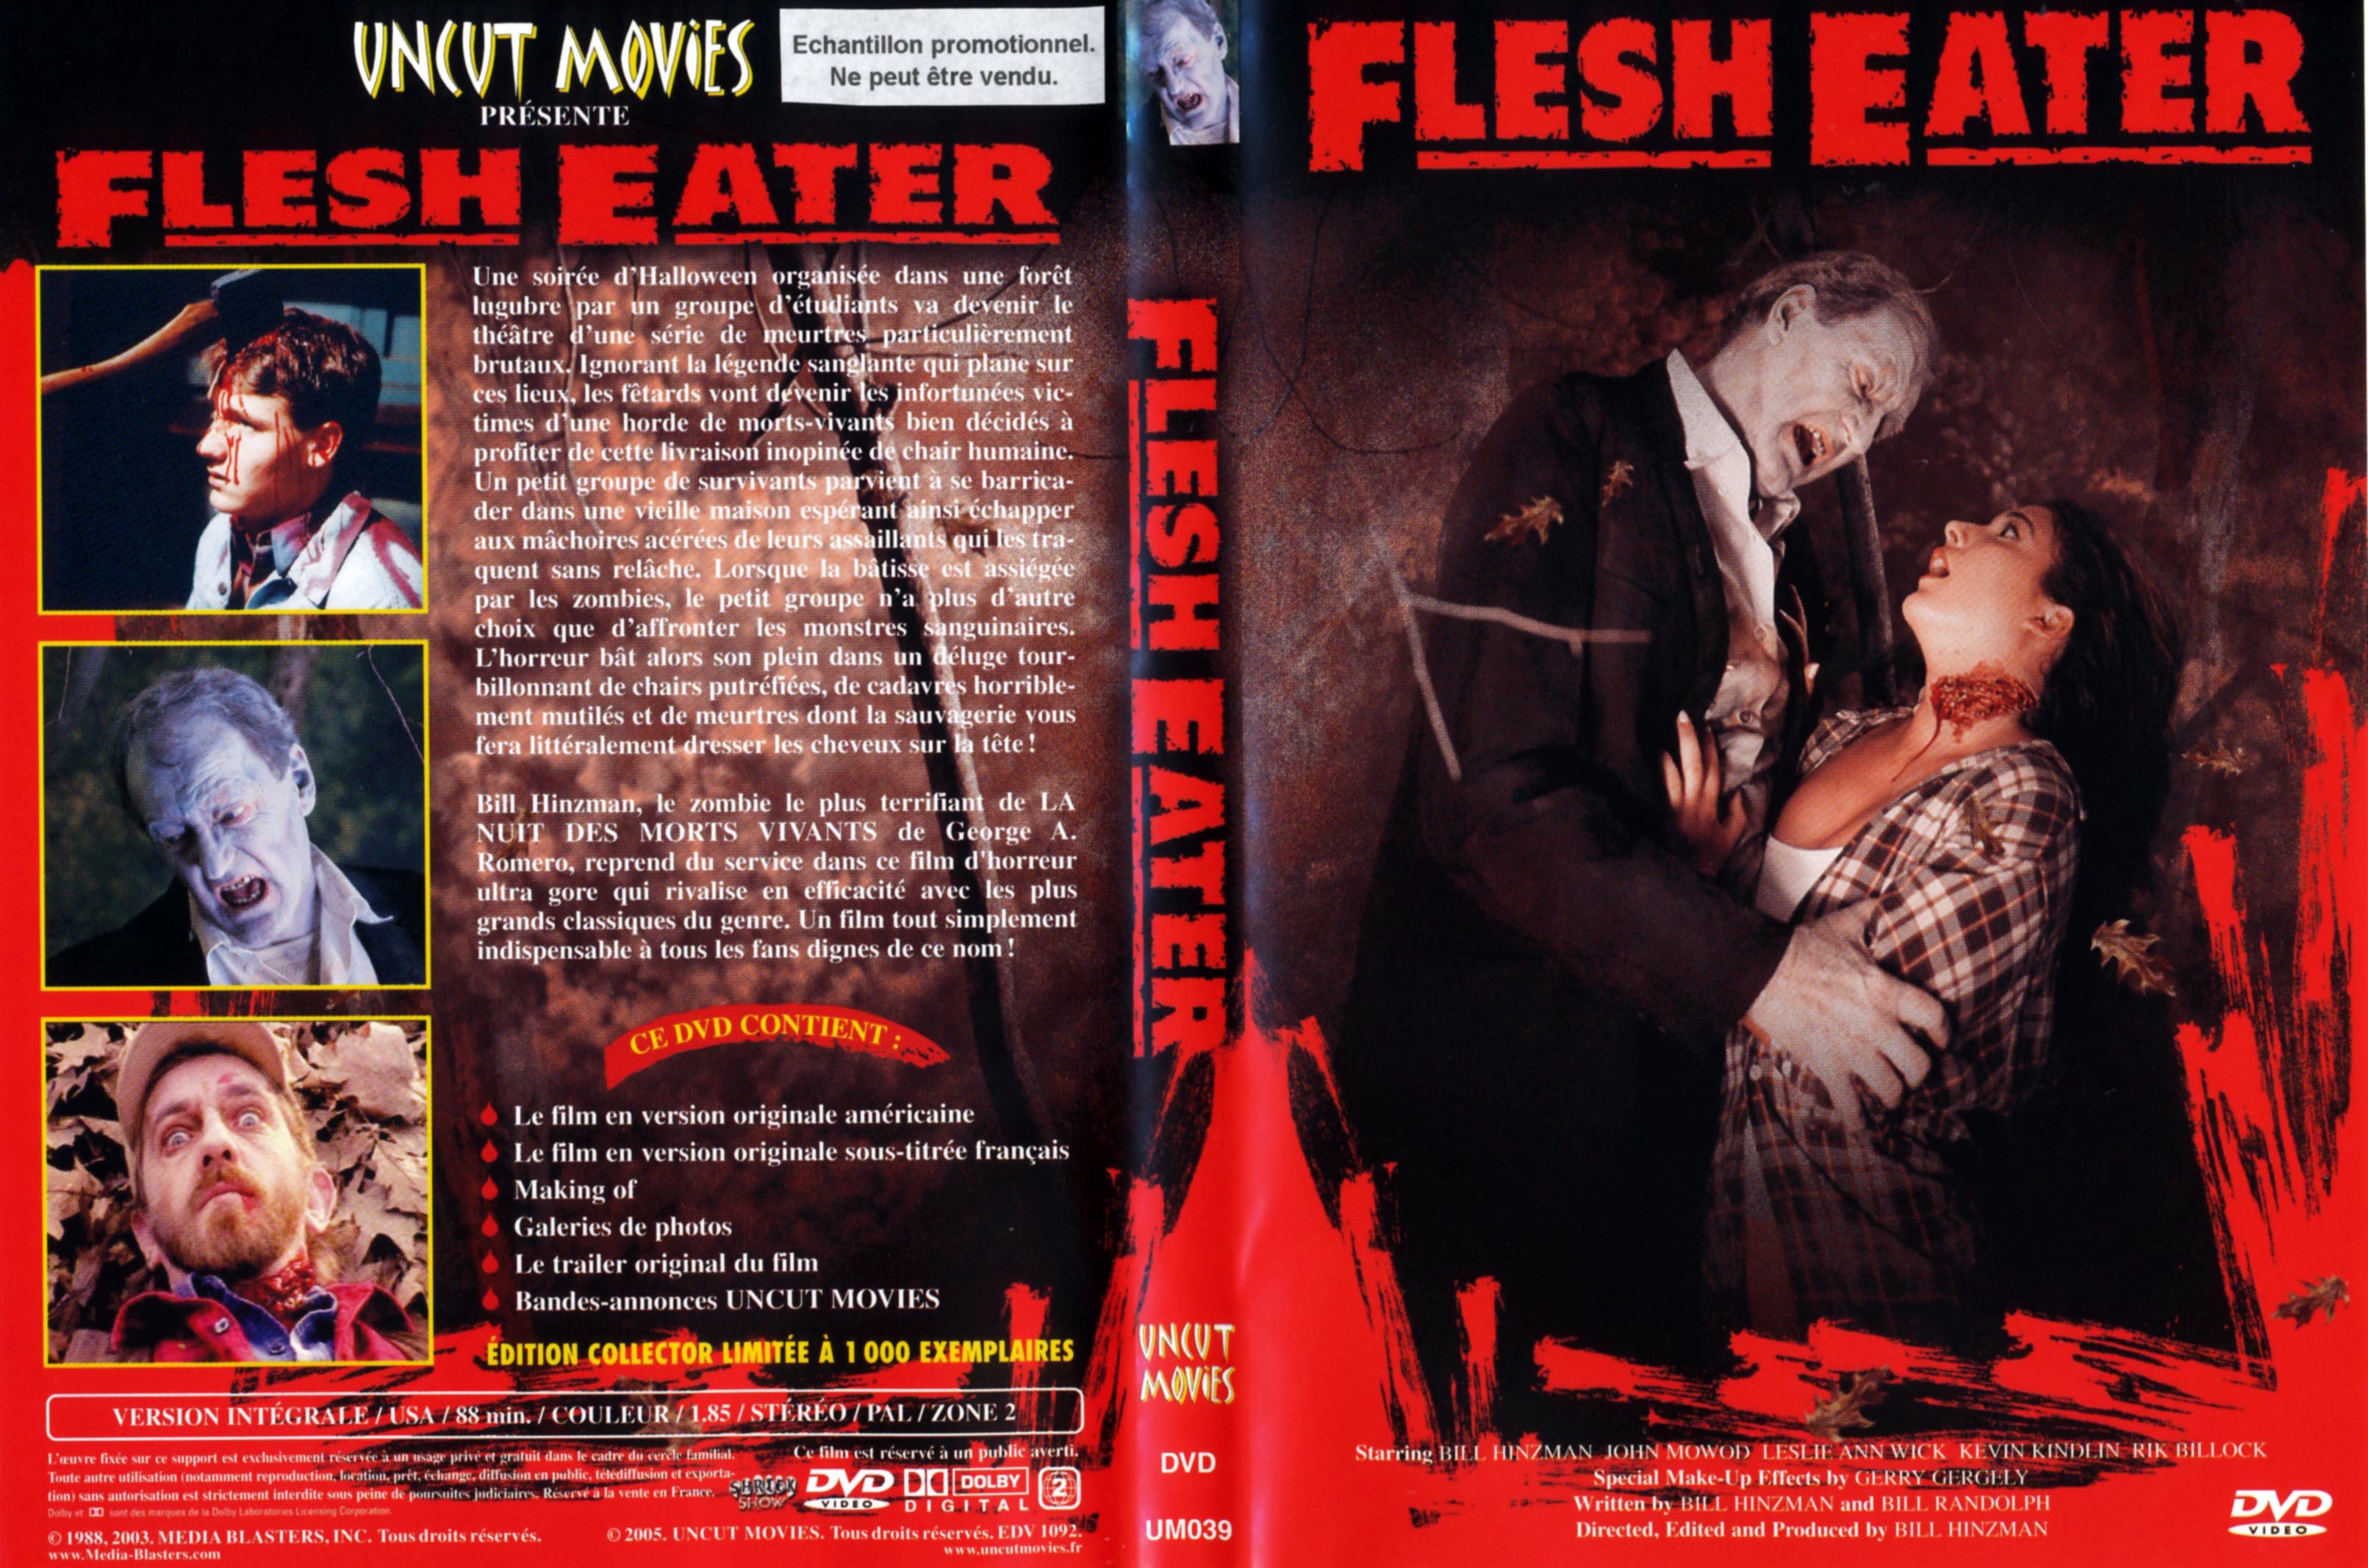 Jaquette DVD Flesh eater